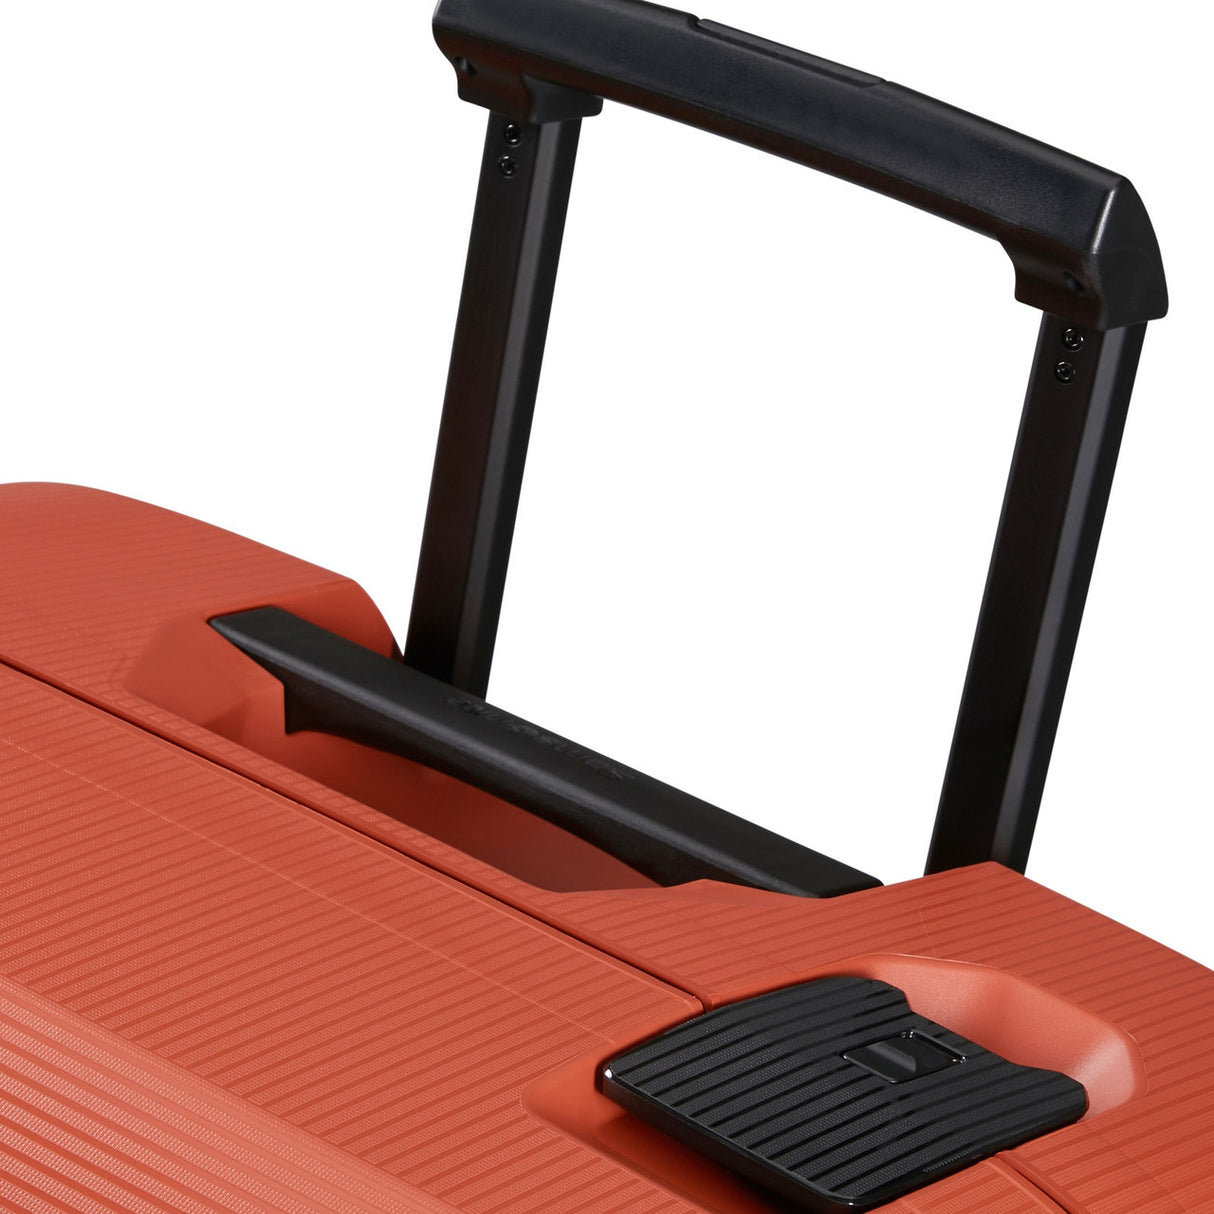 Samsonite Magnum Eco Stor Koffert Med 4 Hjul Maple Orange